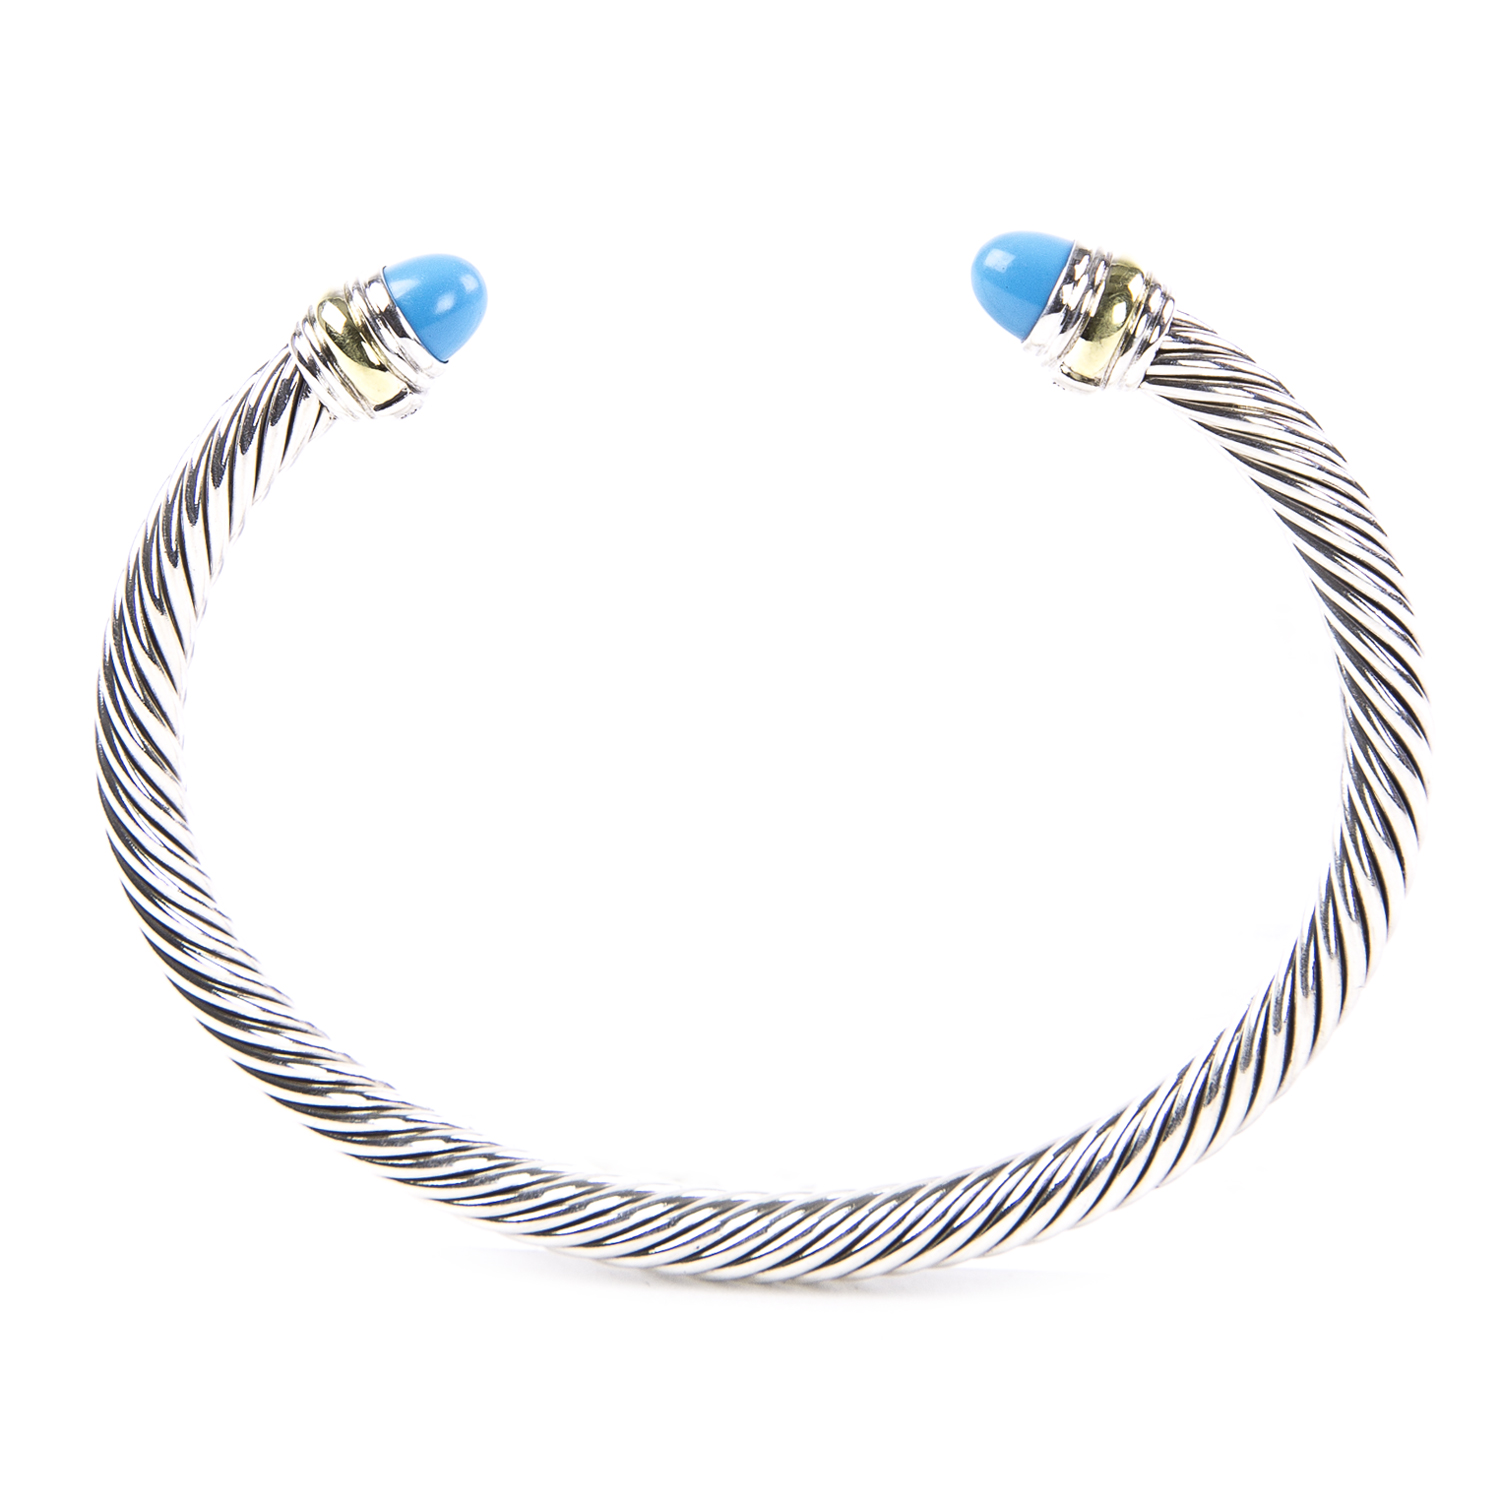 DAVID YURMAN Women/'s Cable Classics Bracelet Blue Topaz /& 14K Gold 5mm $625 NEW